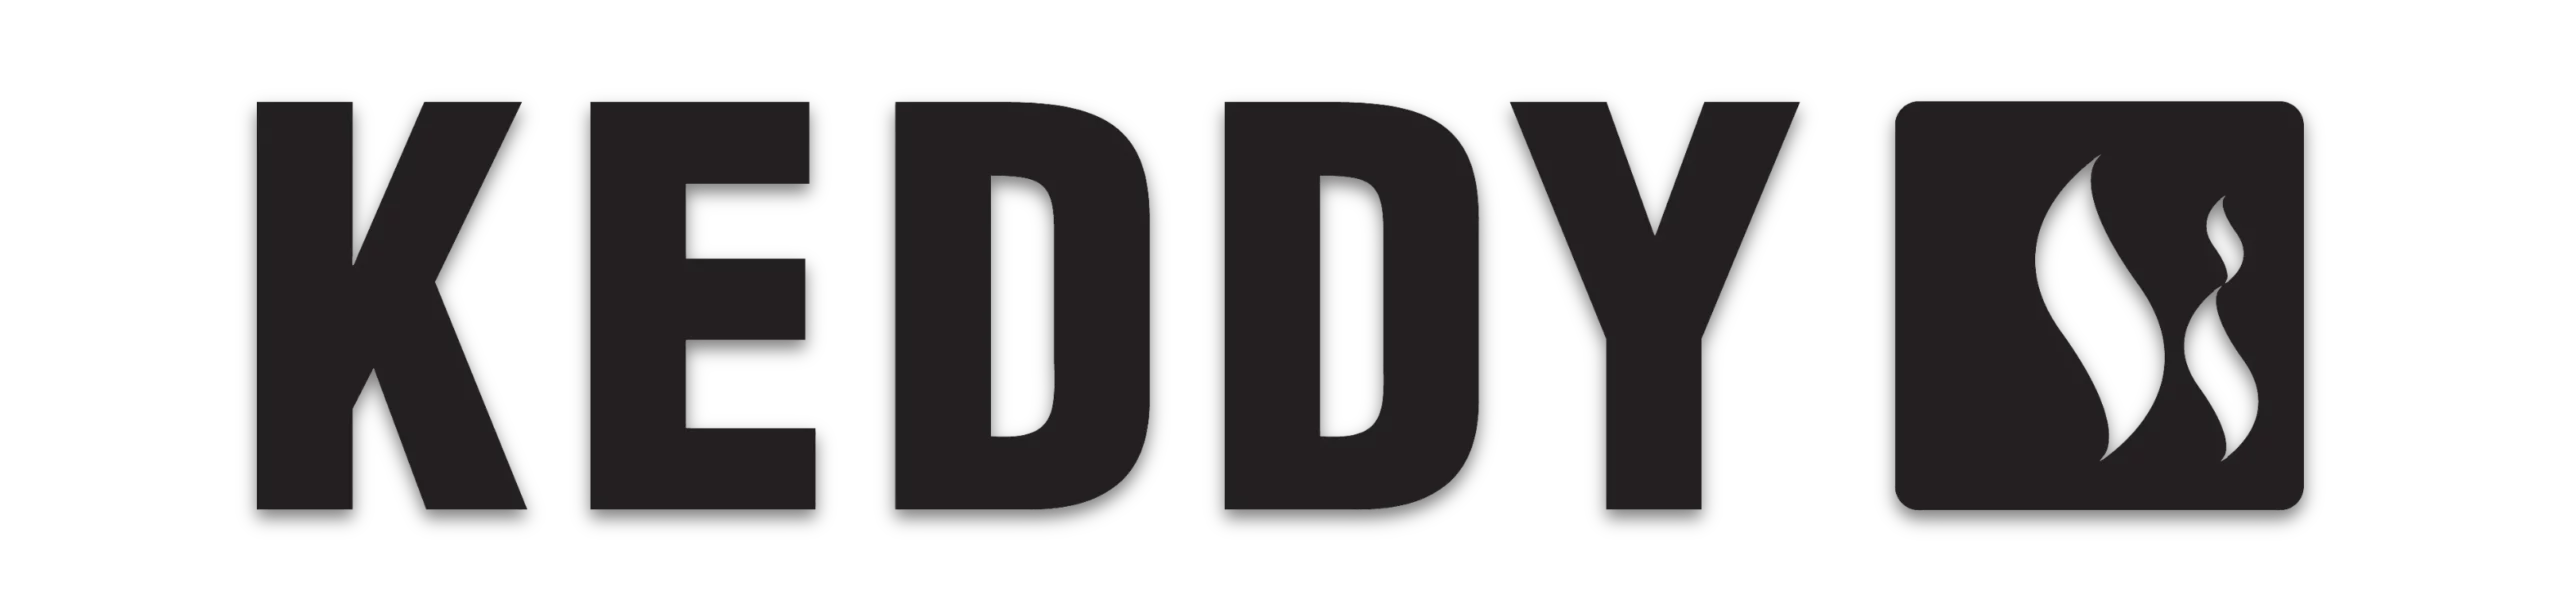 Keddy logo utan payoff